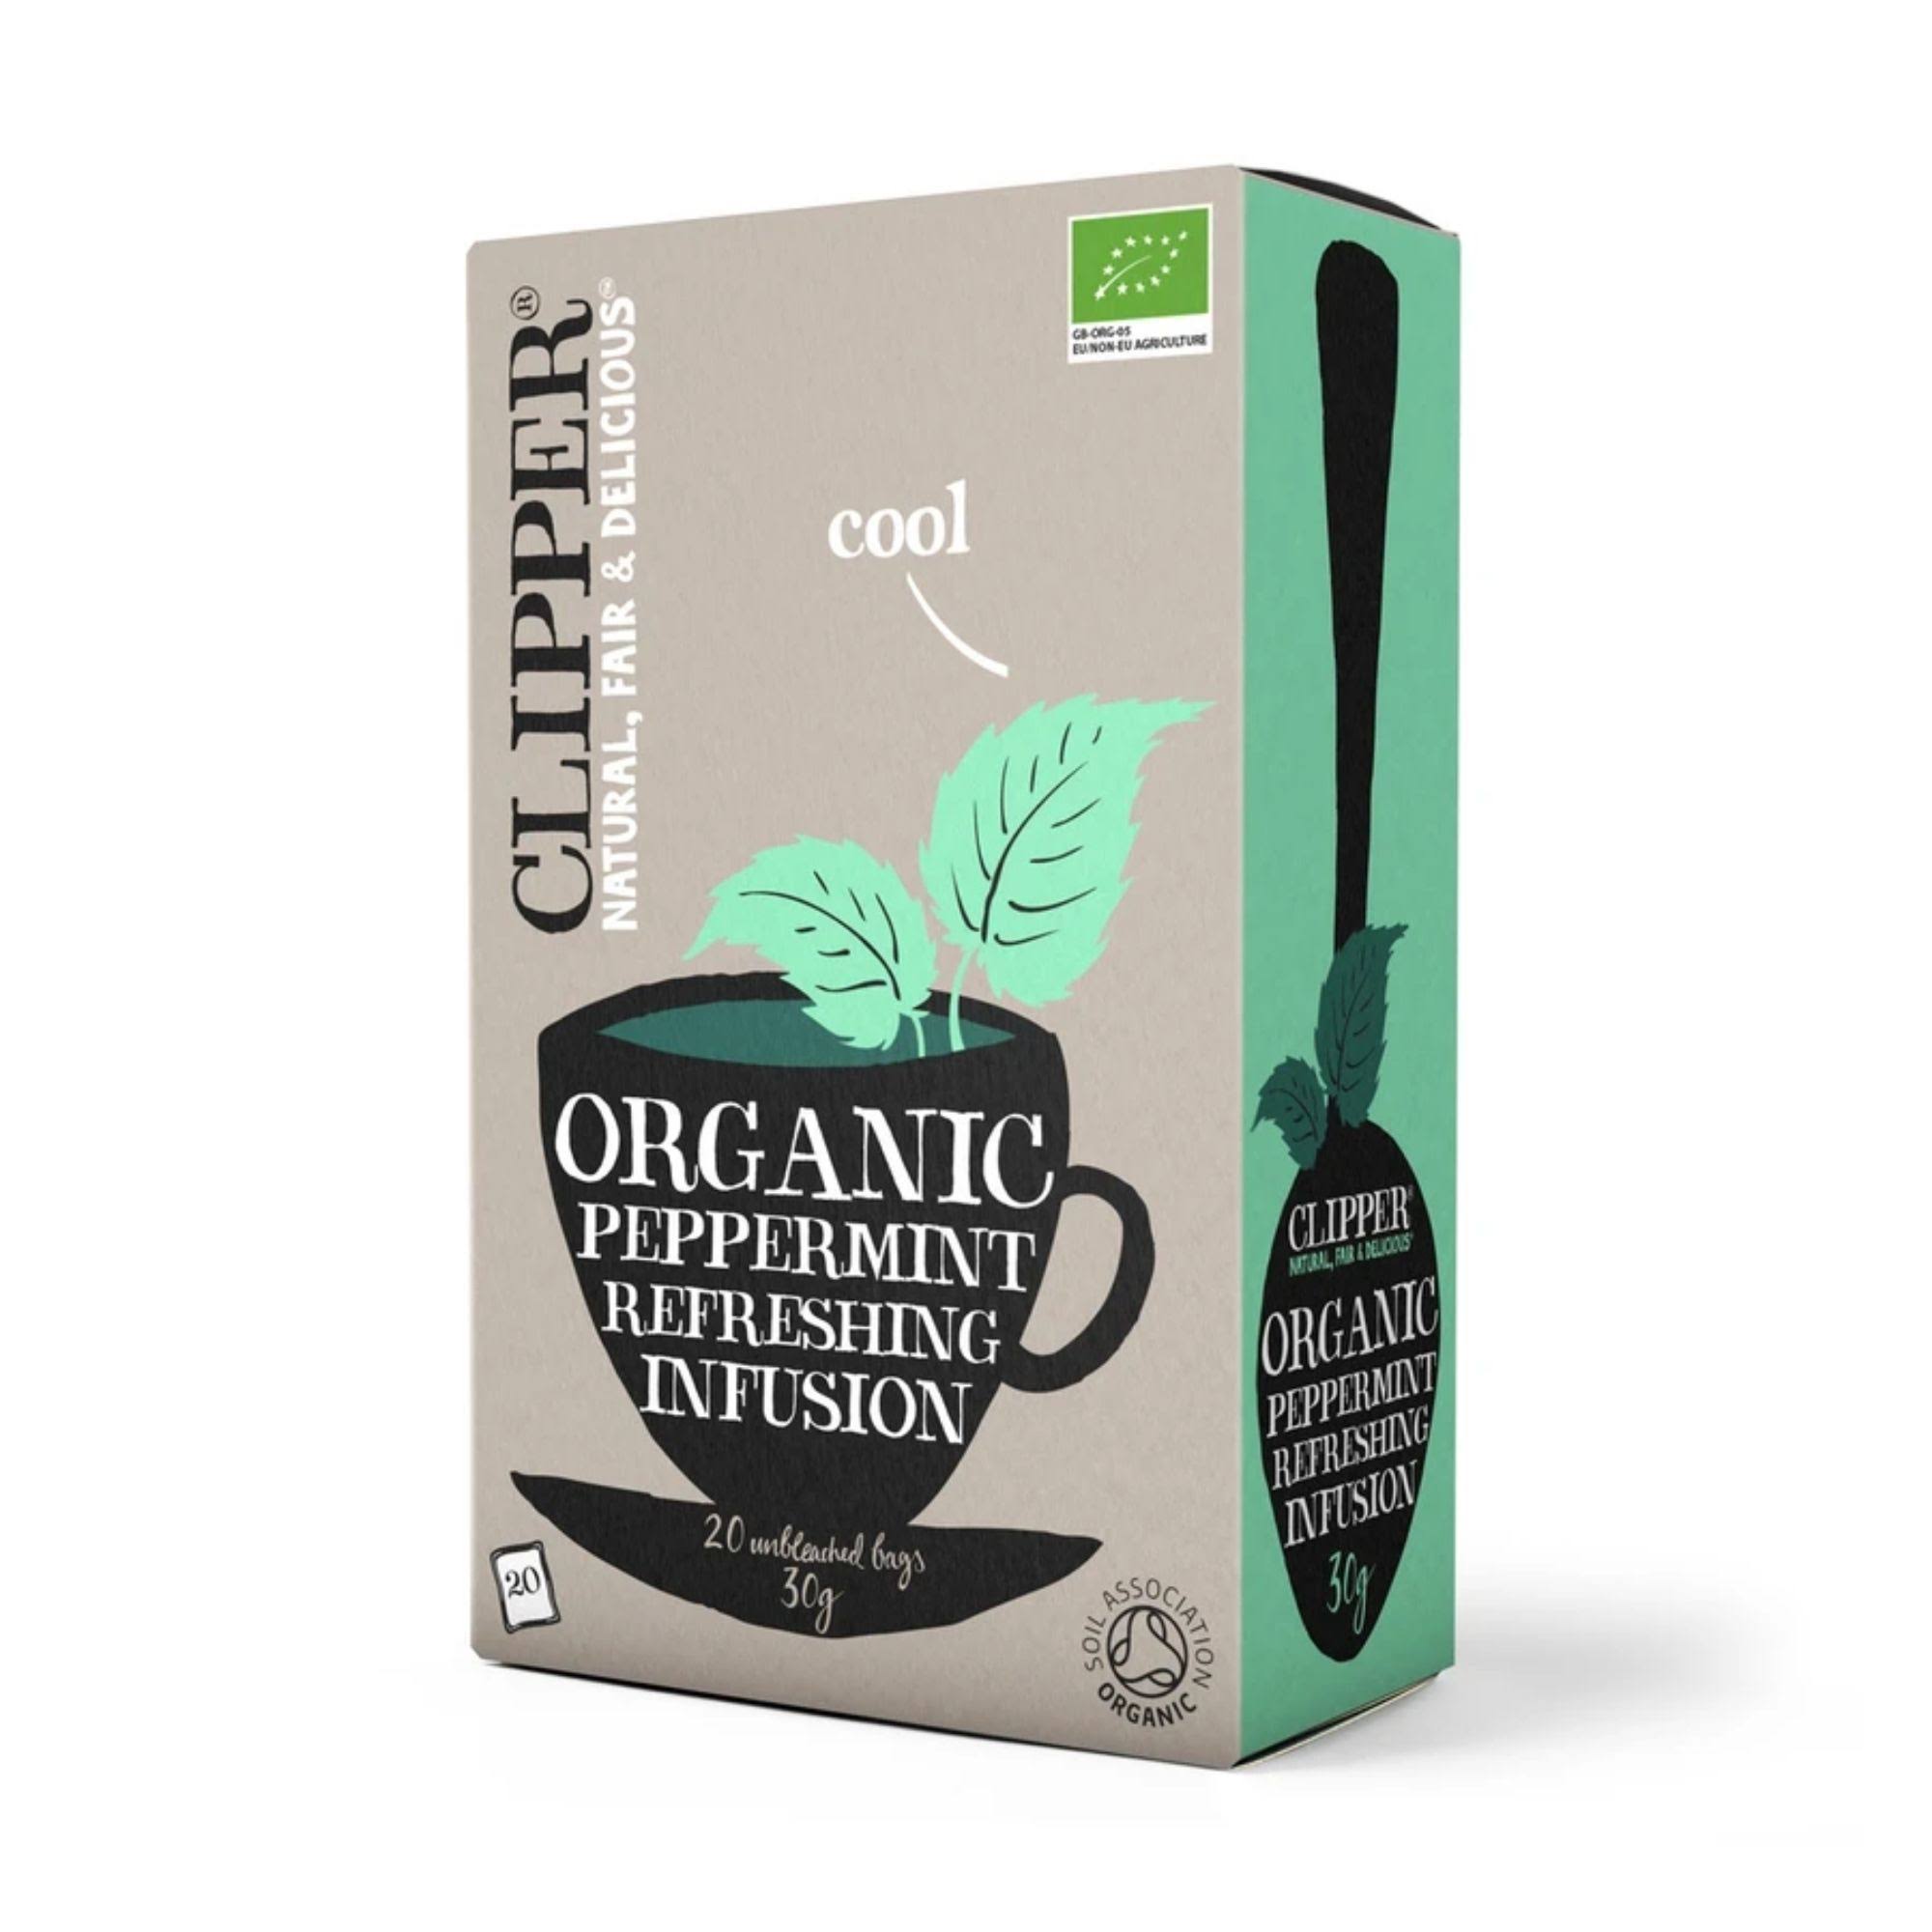 Clipper Organic Peppermint Tea - 20 Unbleached Bags